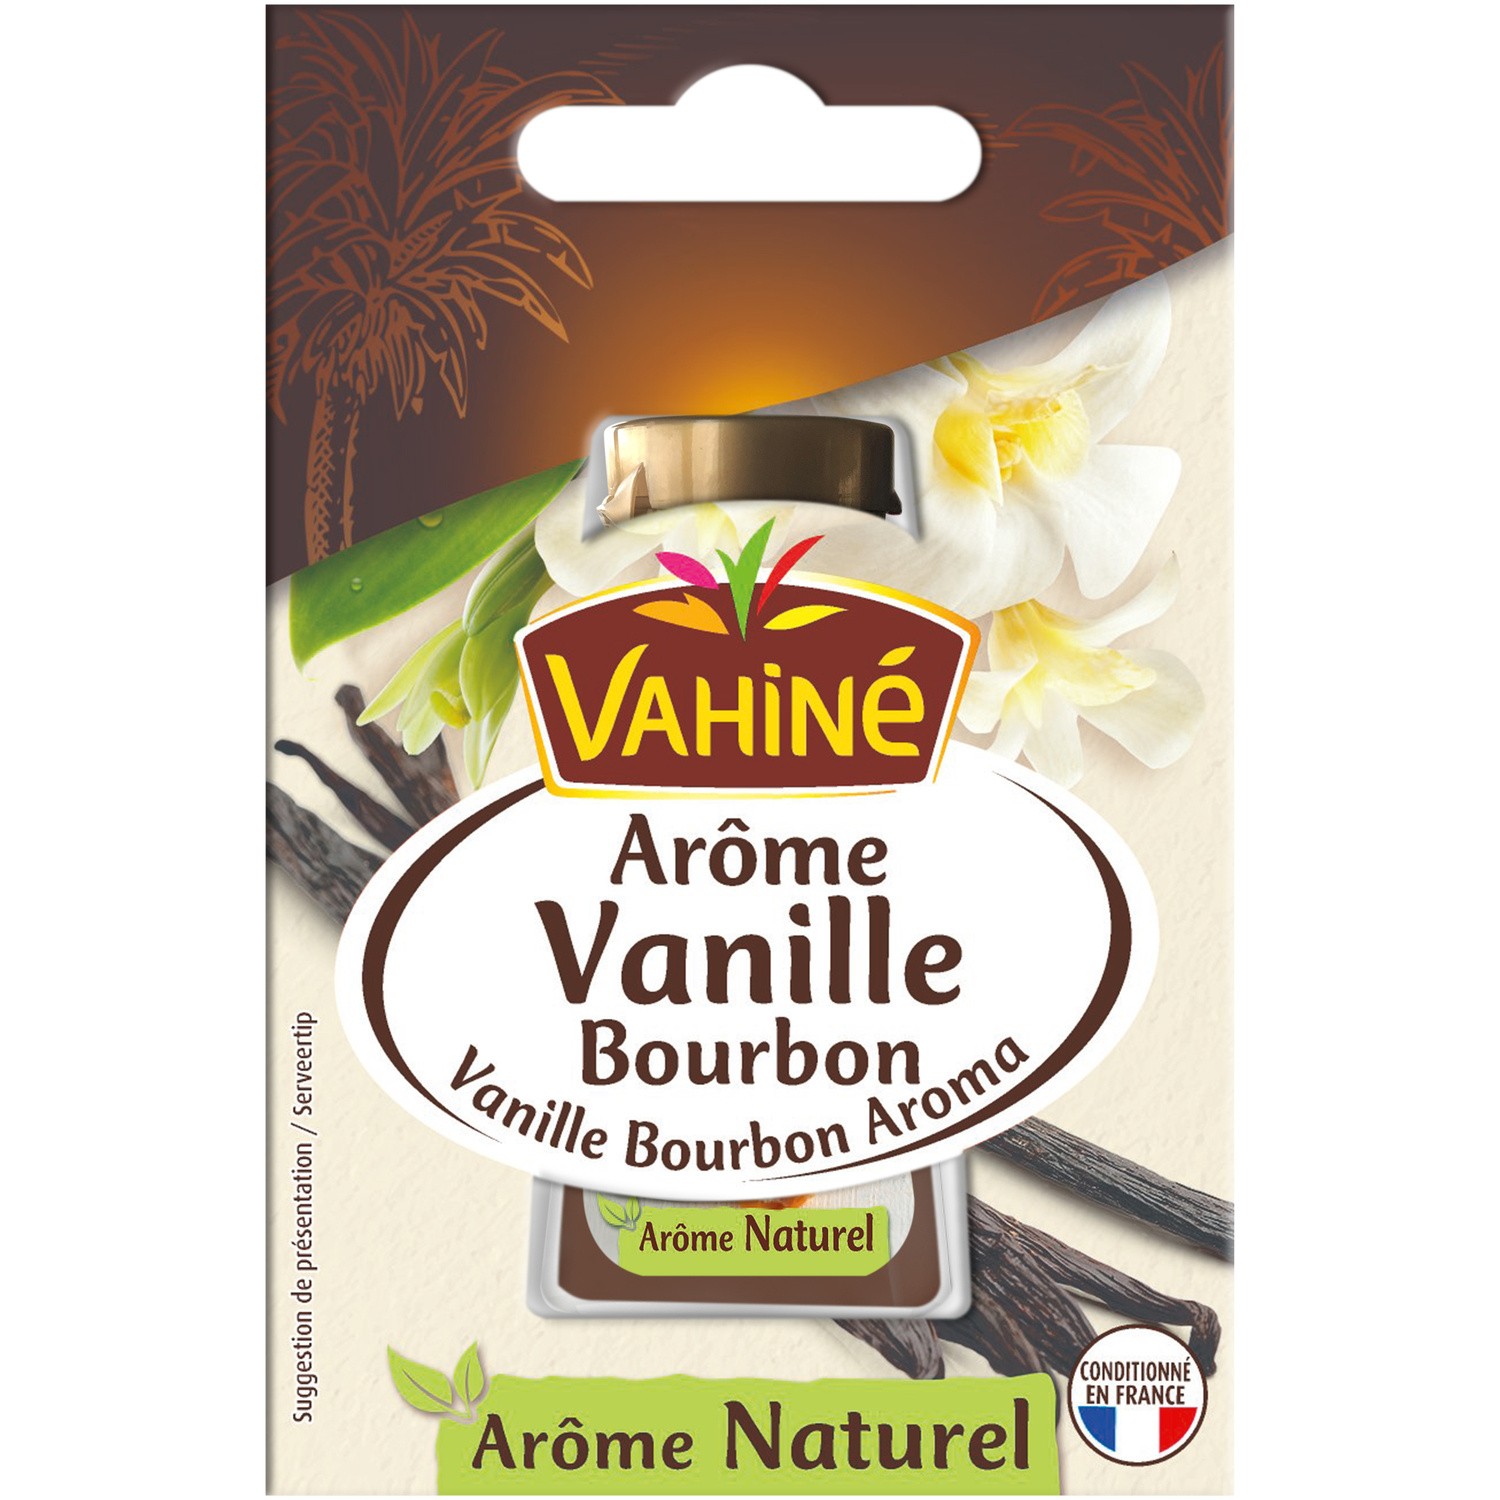 Vahiné Chantifix Reviews